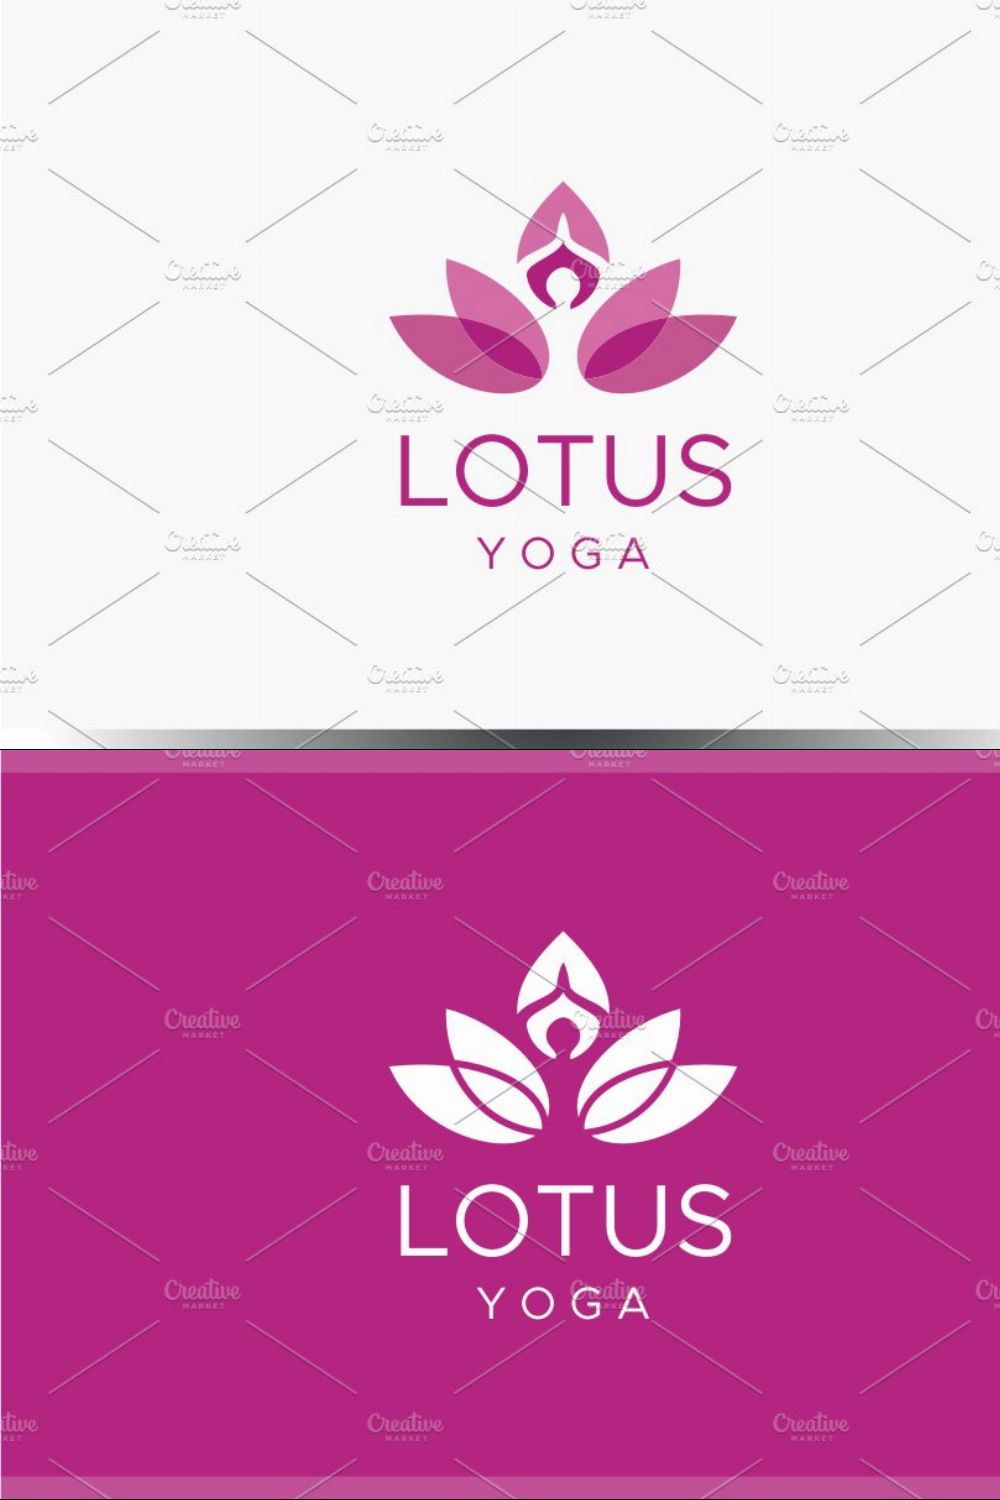 Lotus Yoga Logo pinterest preview image.